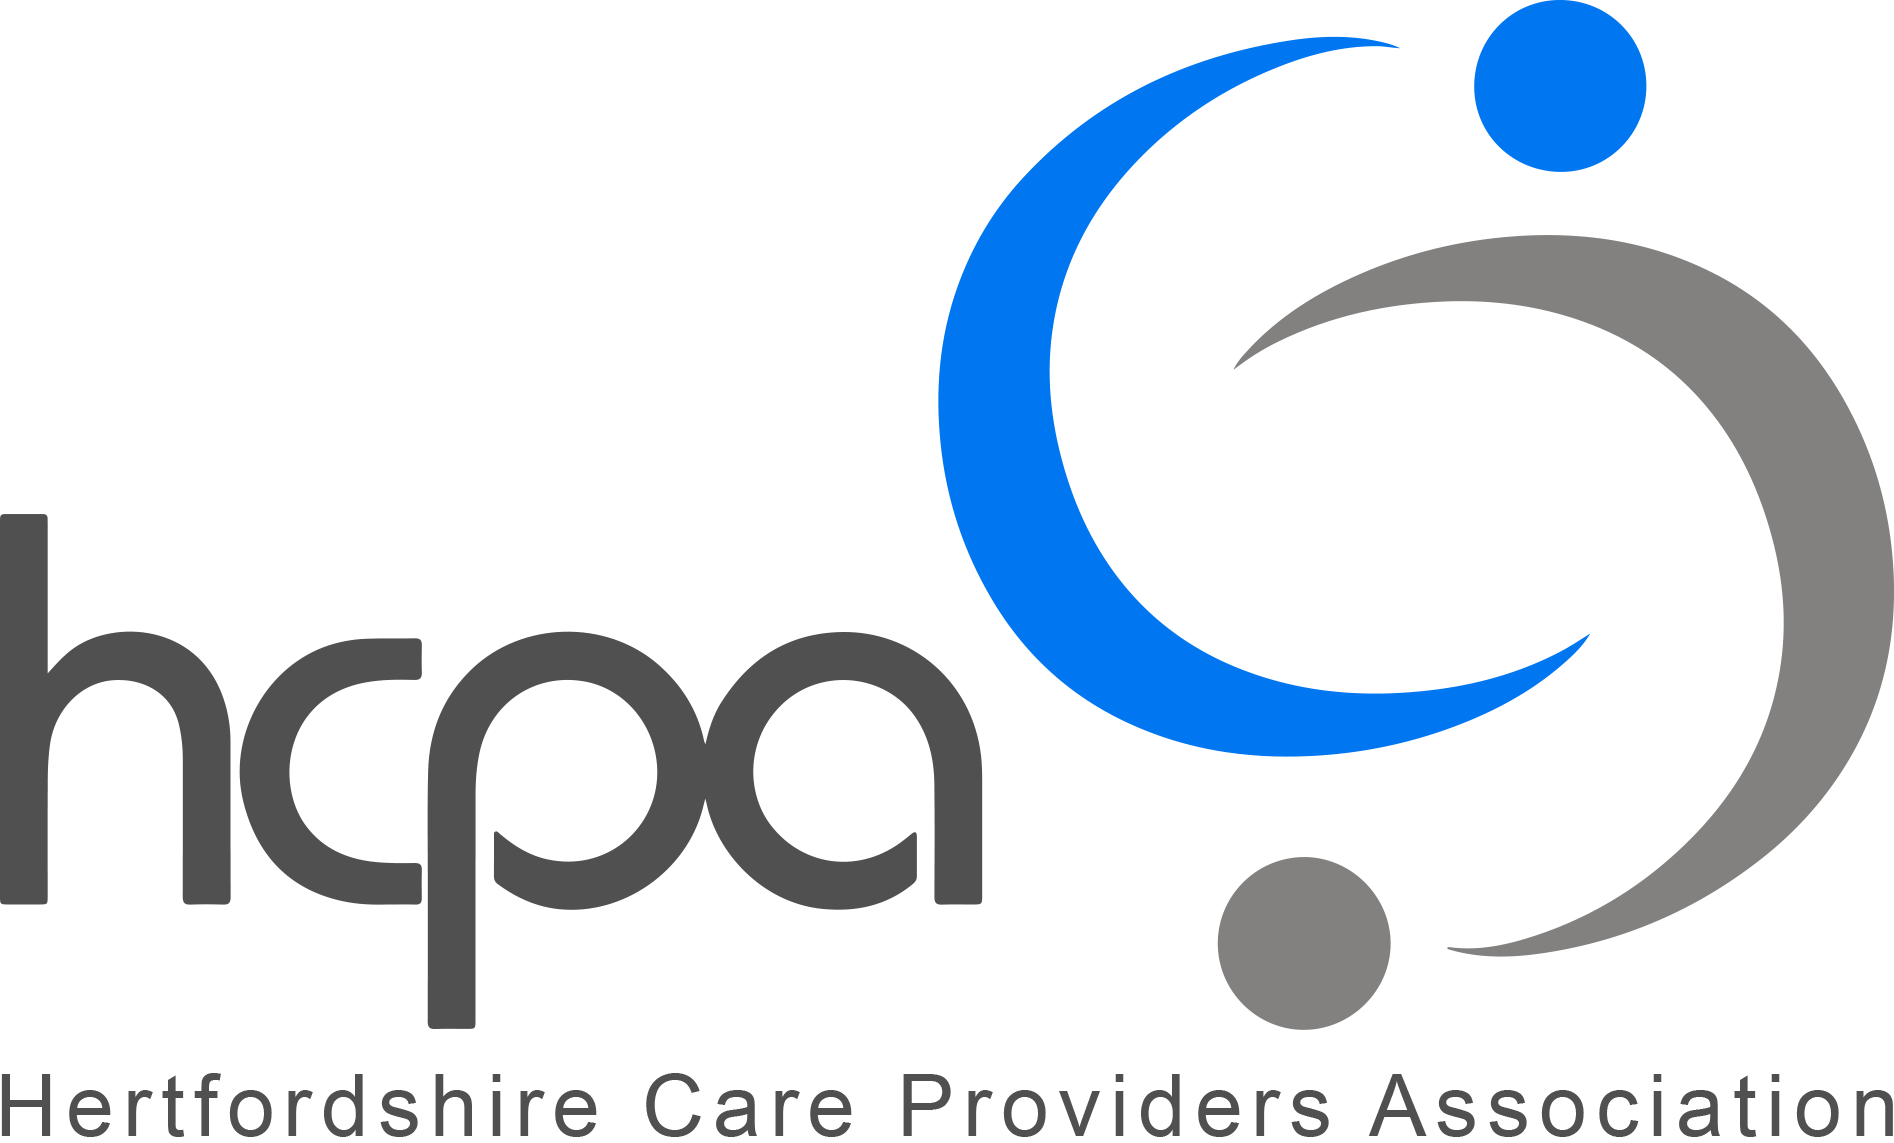 hertfordshire care providers association logo